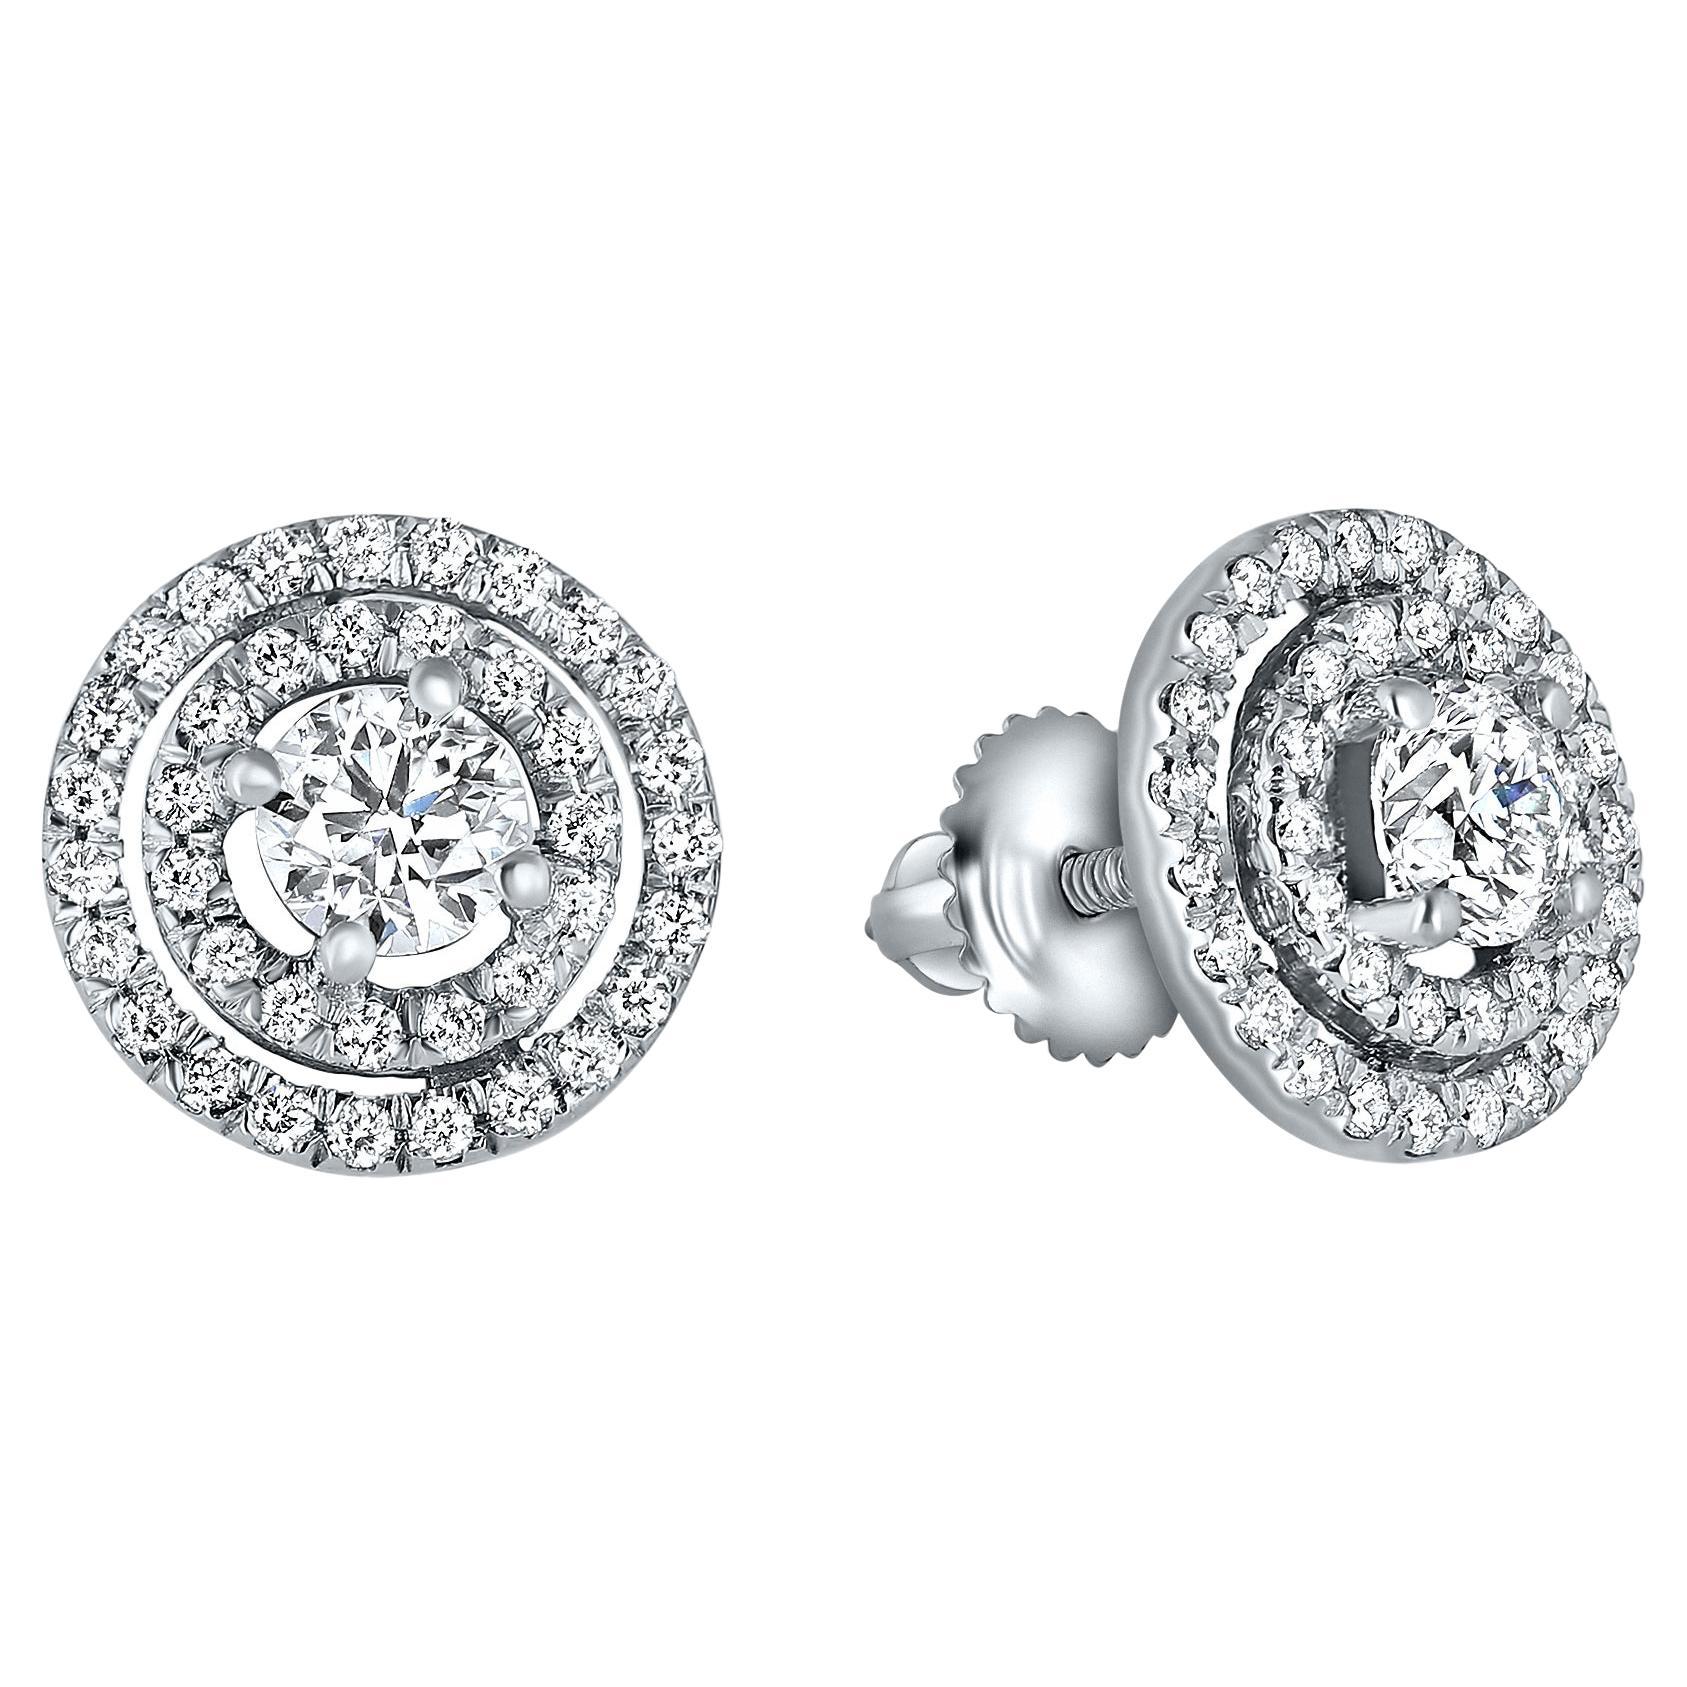 1.15 Carat Diamond Halo Earrings in 14K White Gold - Shlomit Rogel For Sale